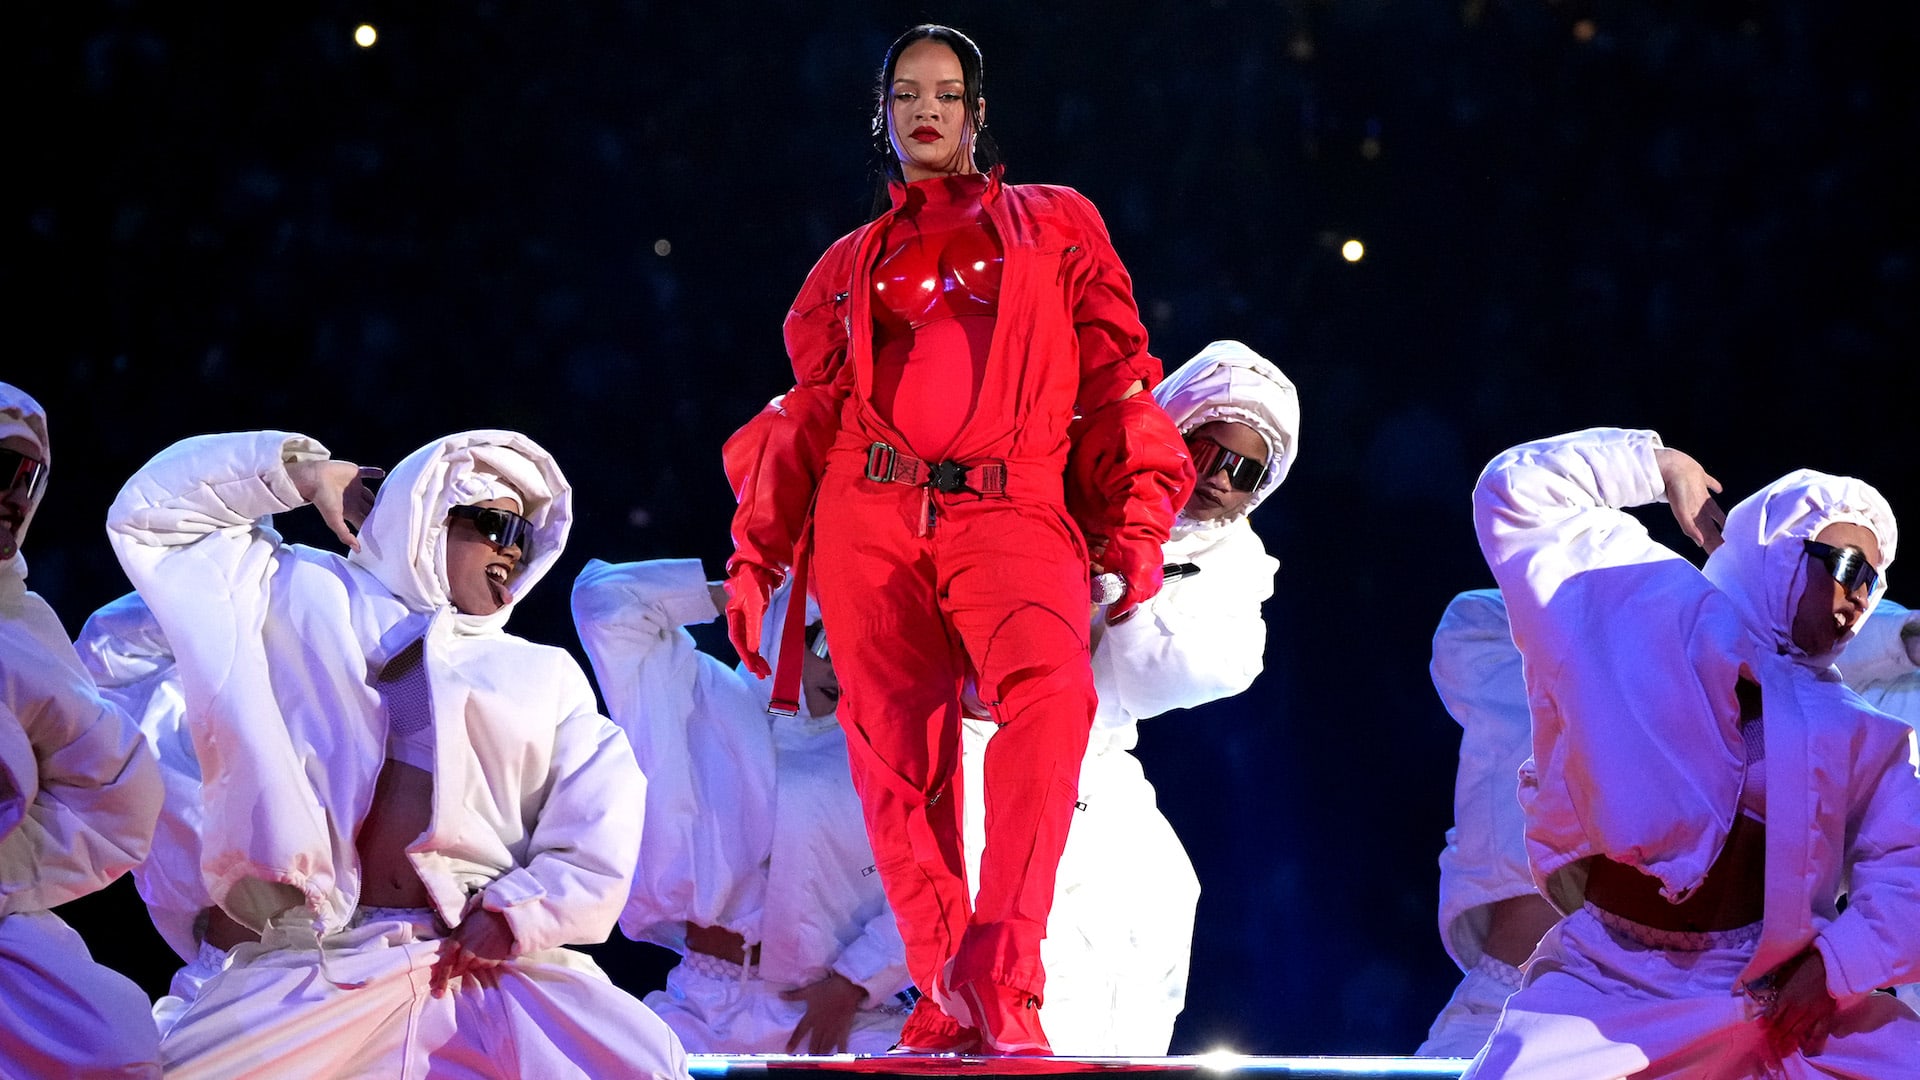 Rihanna wearing custom Loewe for Super Bowl